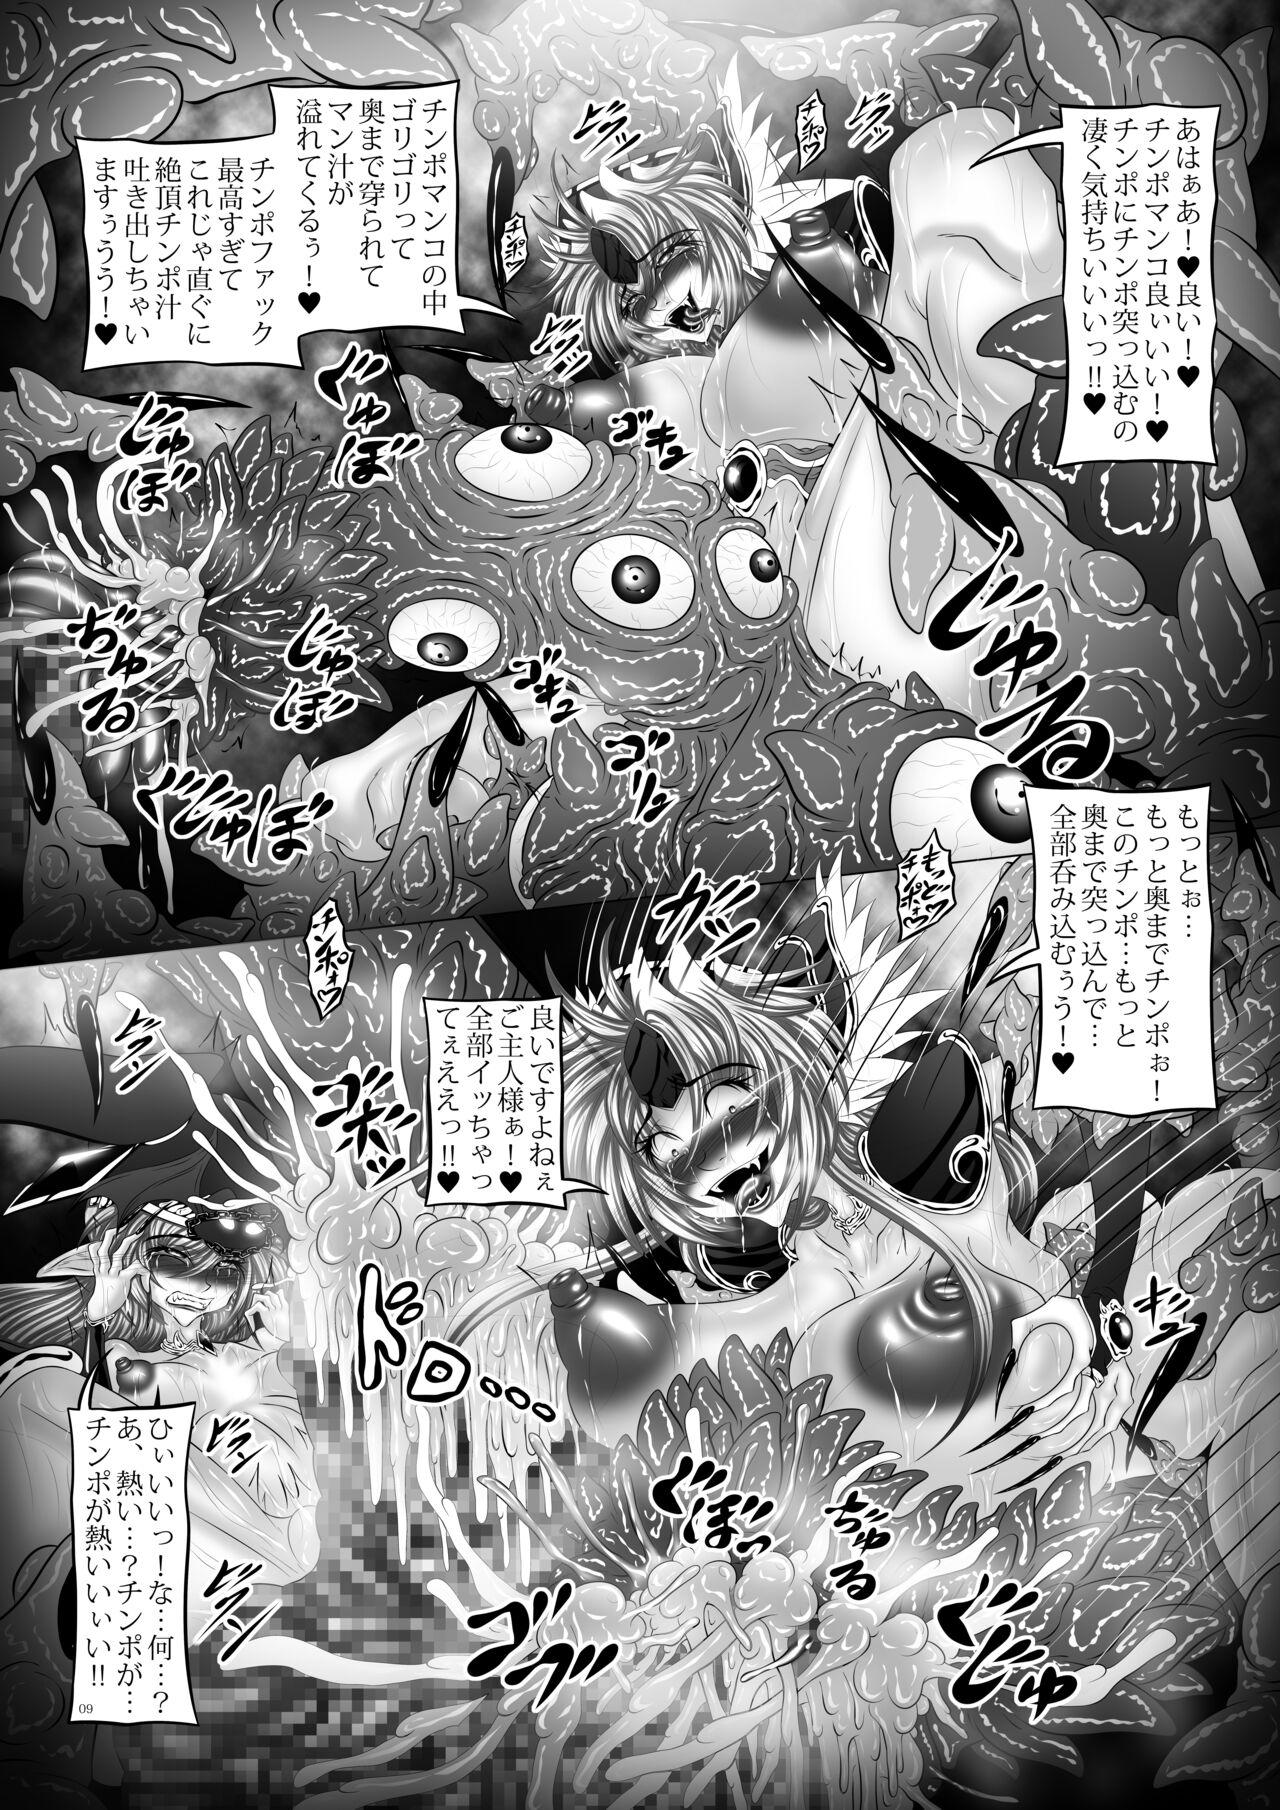 Bigtits Dragon' s Fall V - Seiken densetsu 3 Cartoon - Page 8